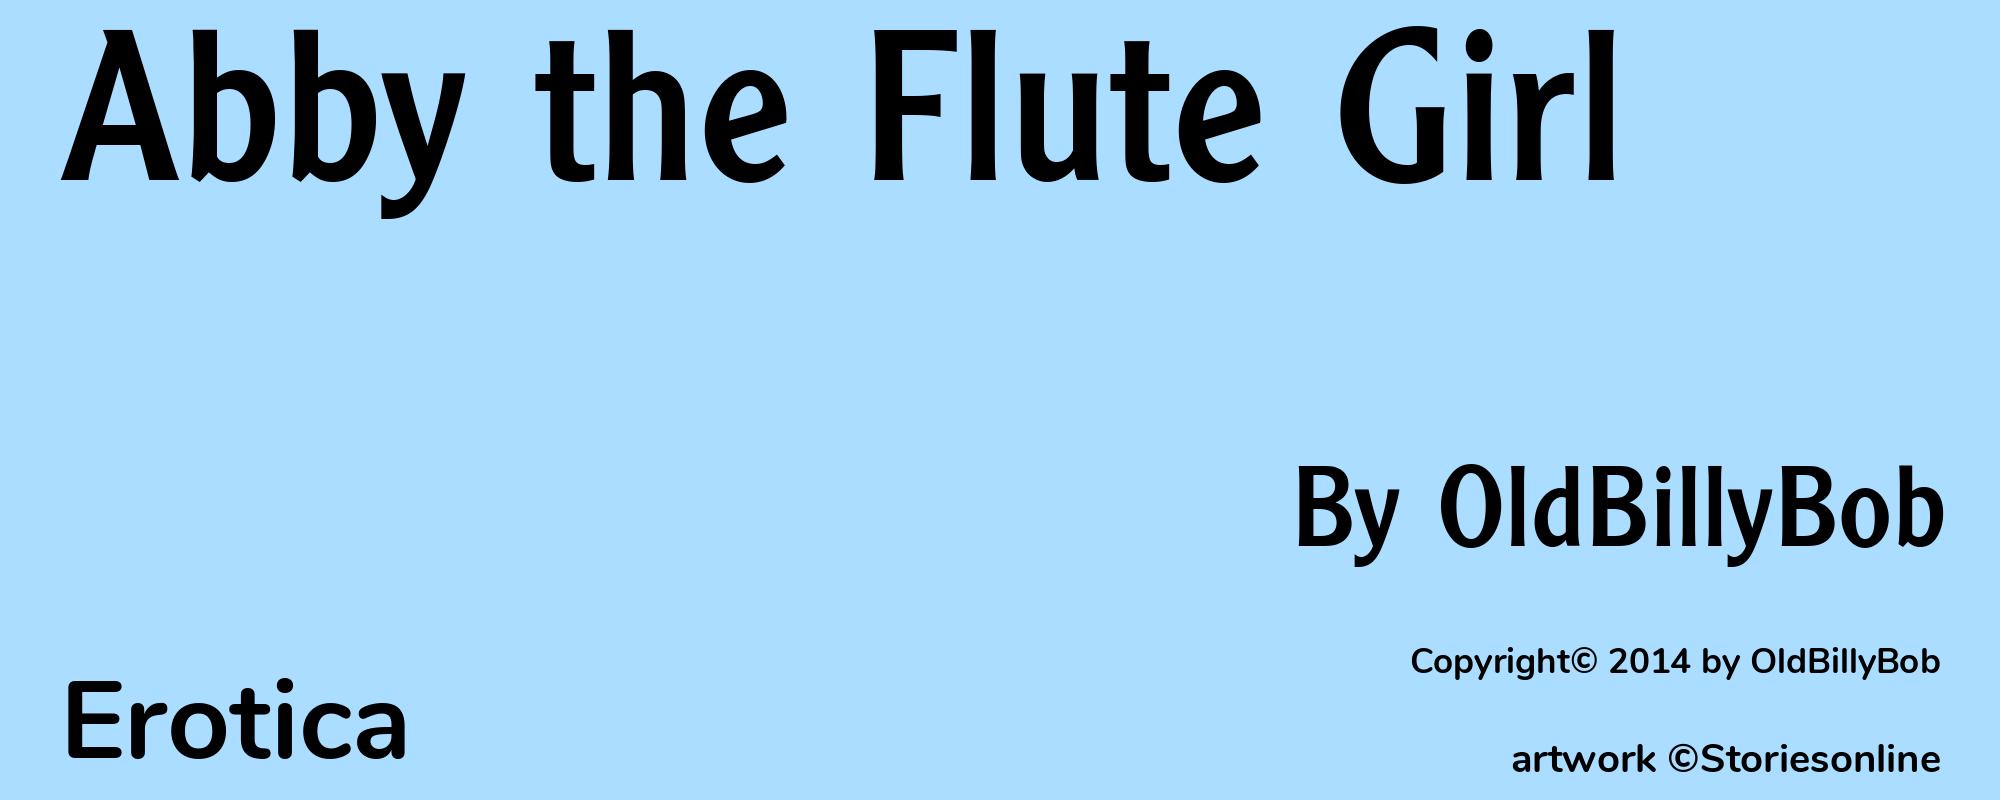 Abby the Flute Girl - Cover